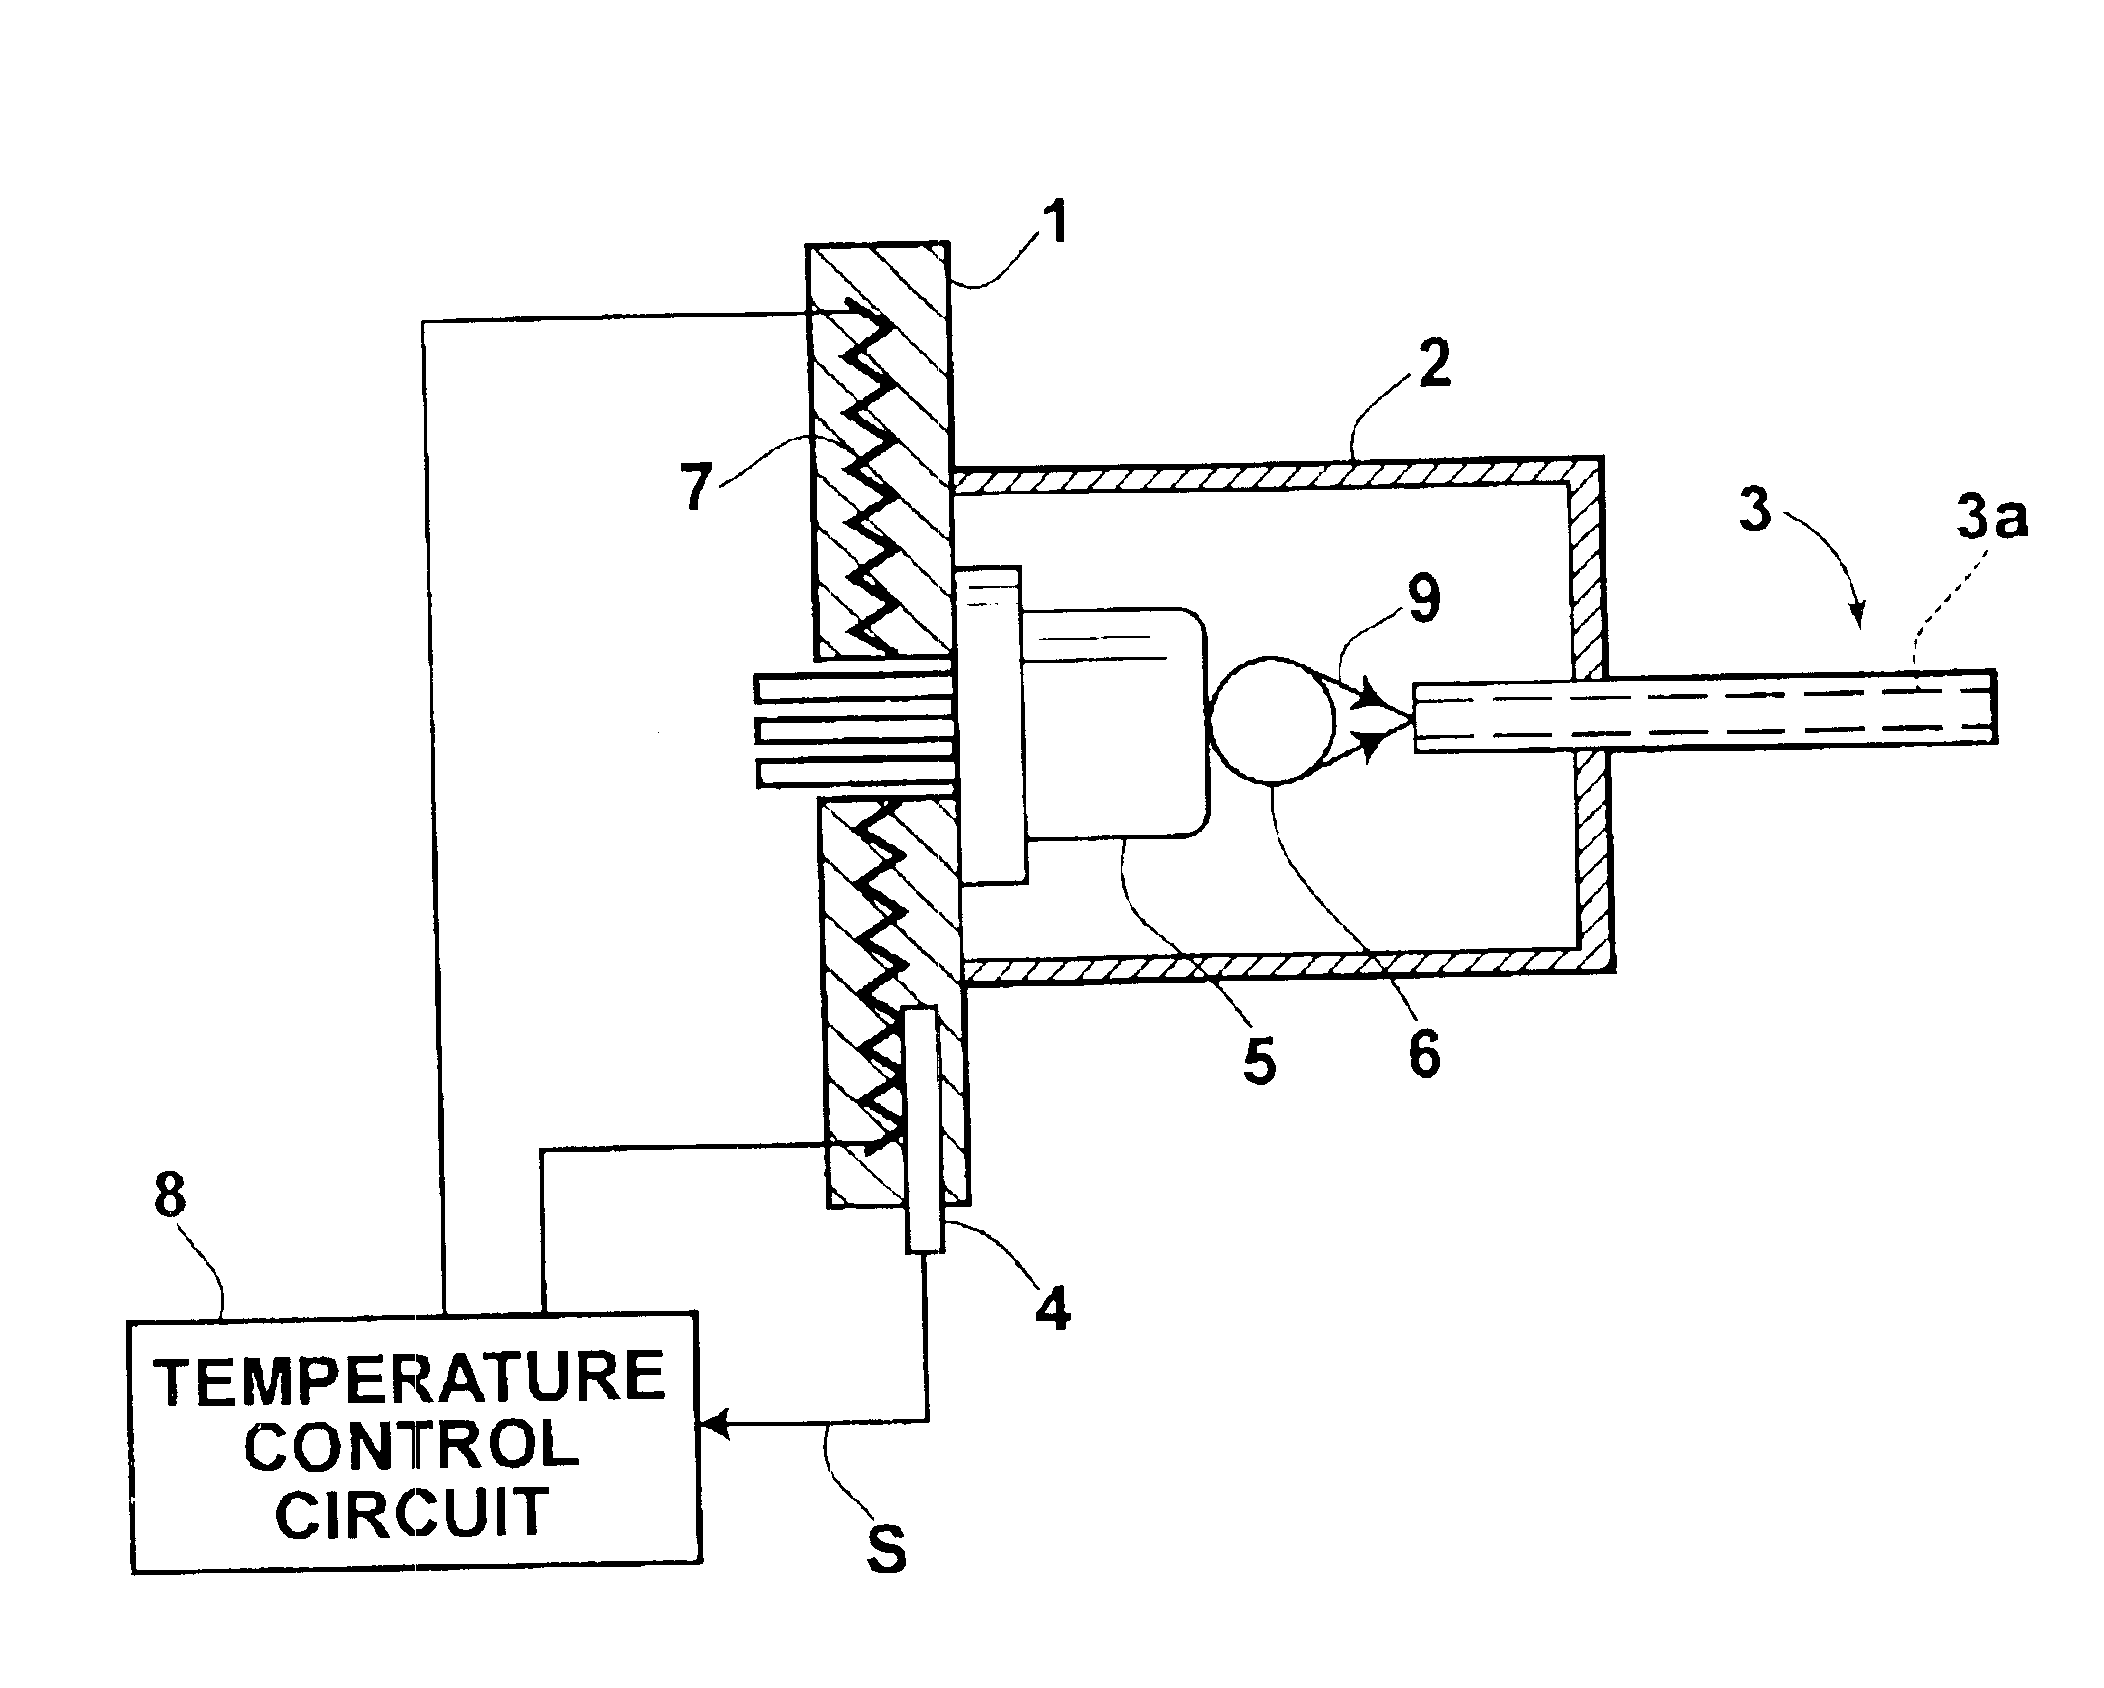 Transmission apparatus using a plastic fiber